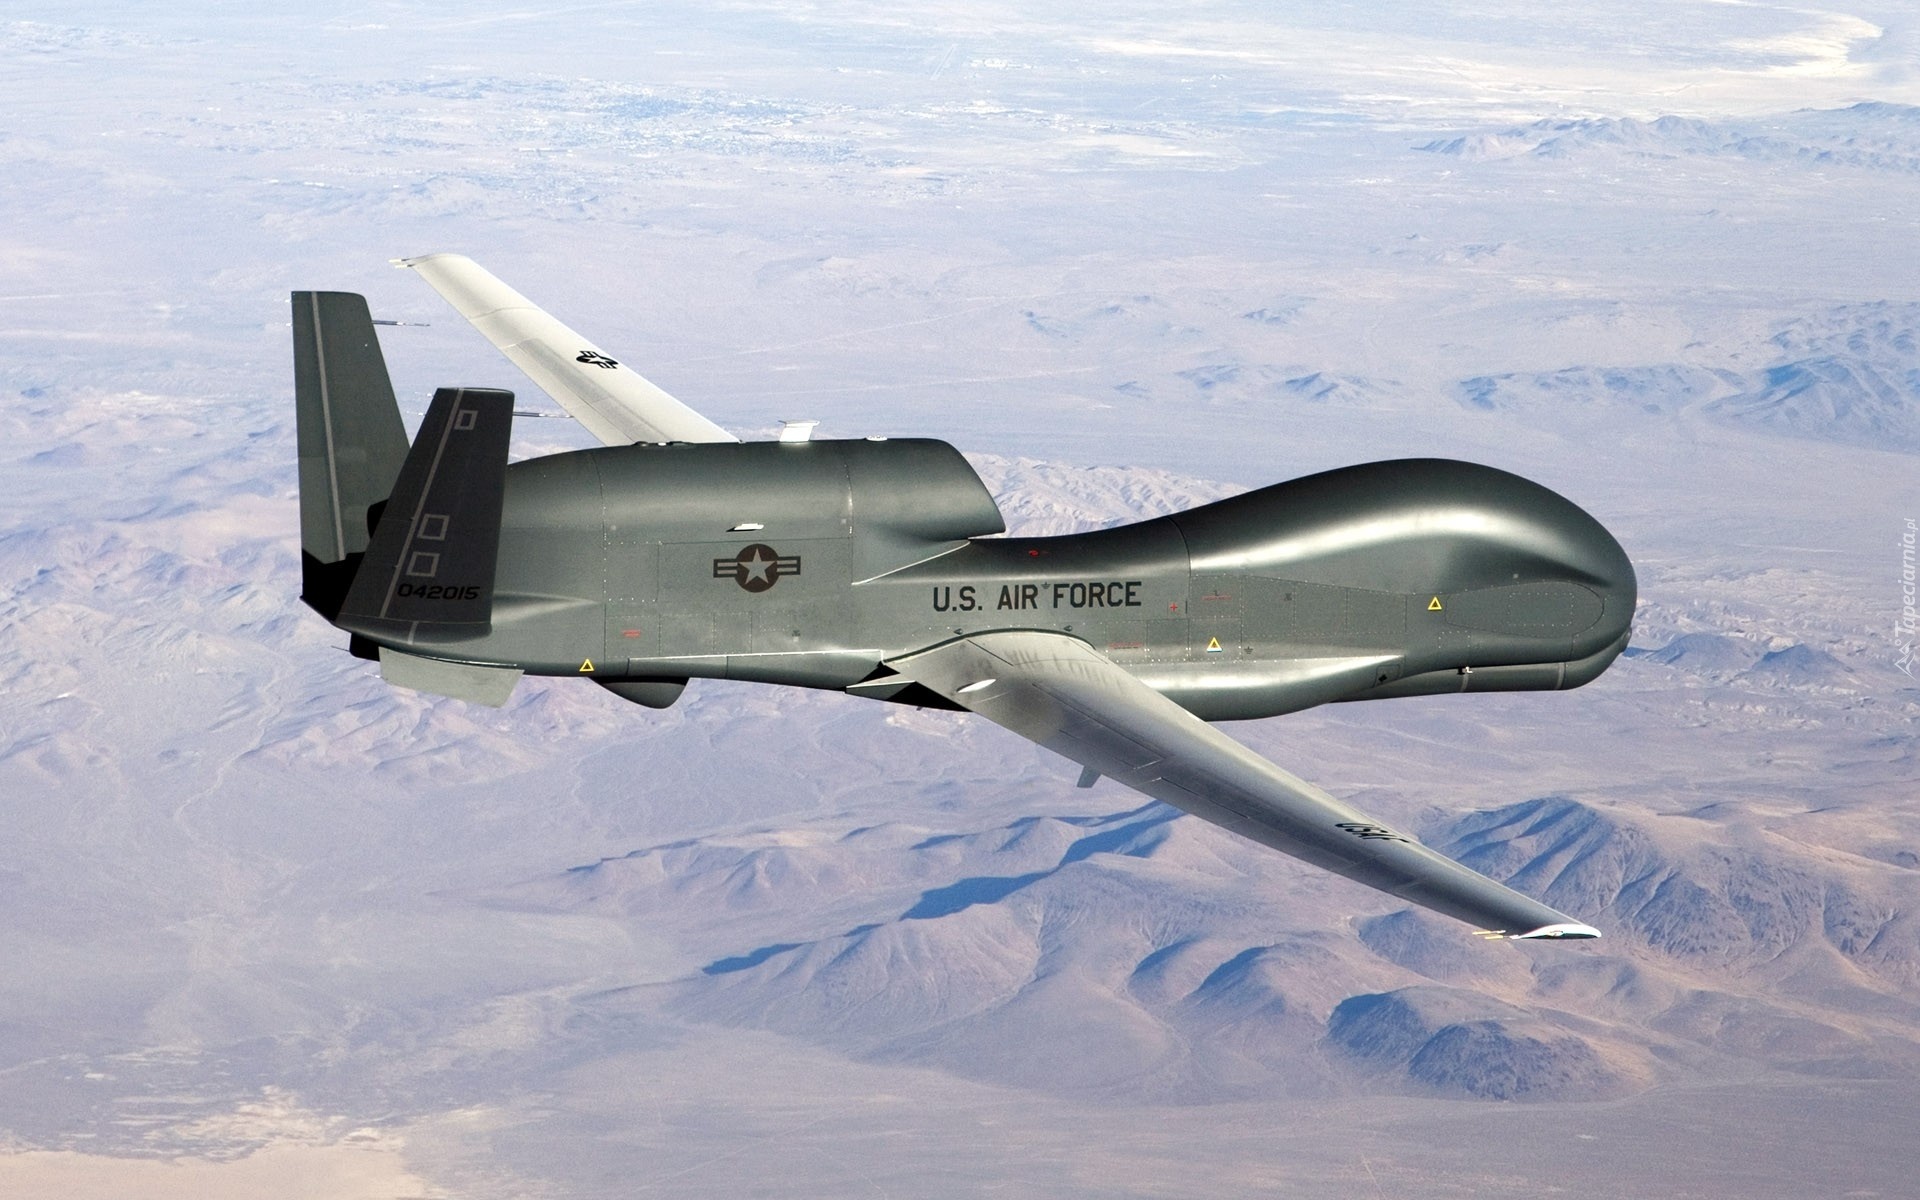 Bezzałogowy, Dron, Northrop, Grumman, RQ-4B, Global Hawk